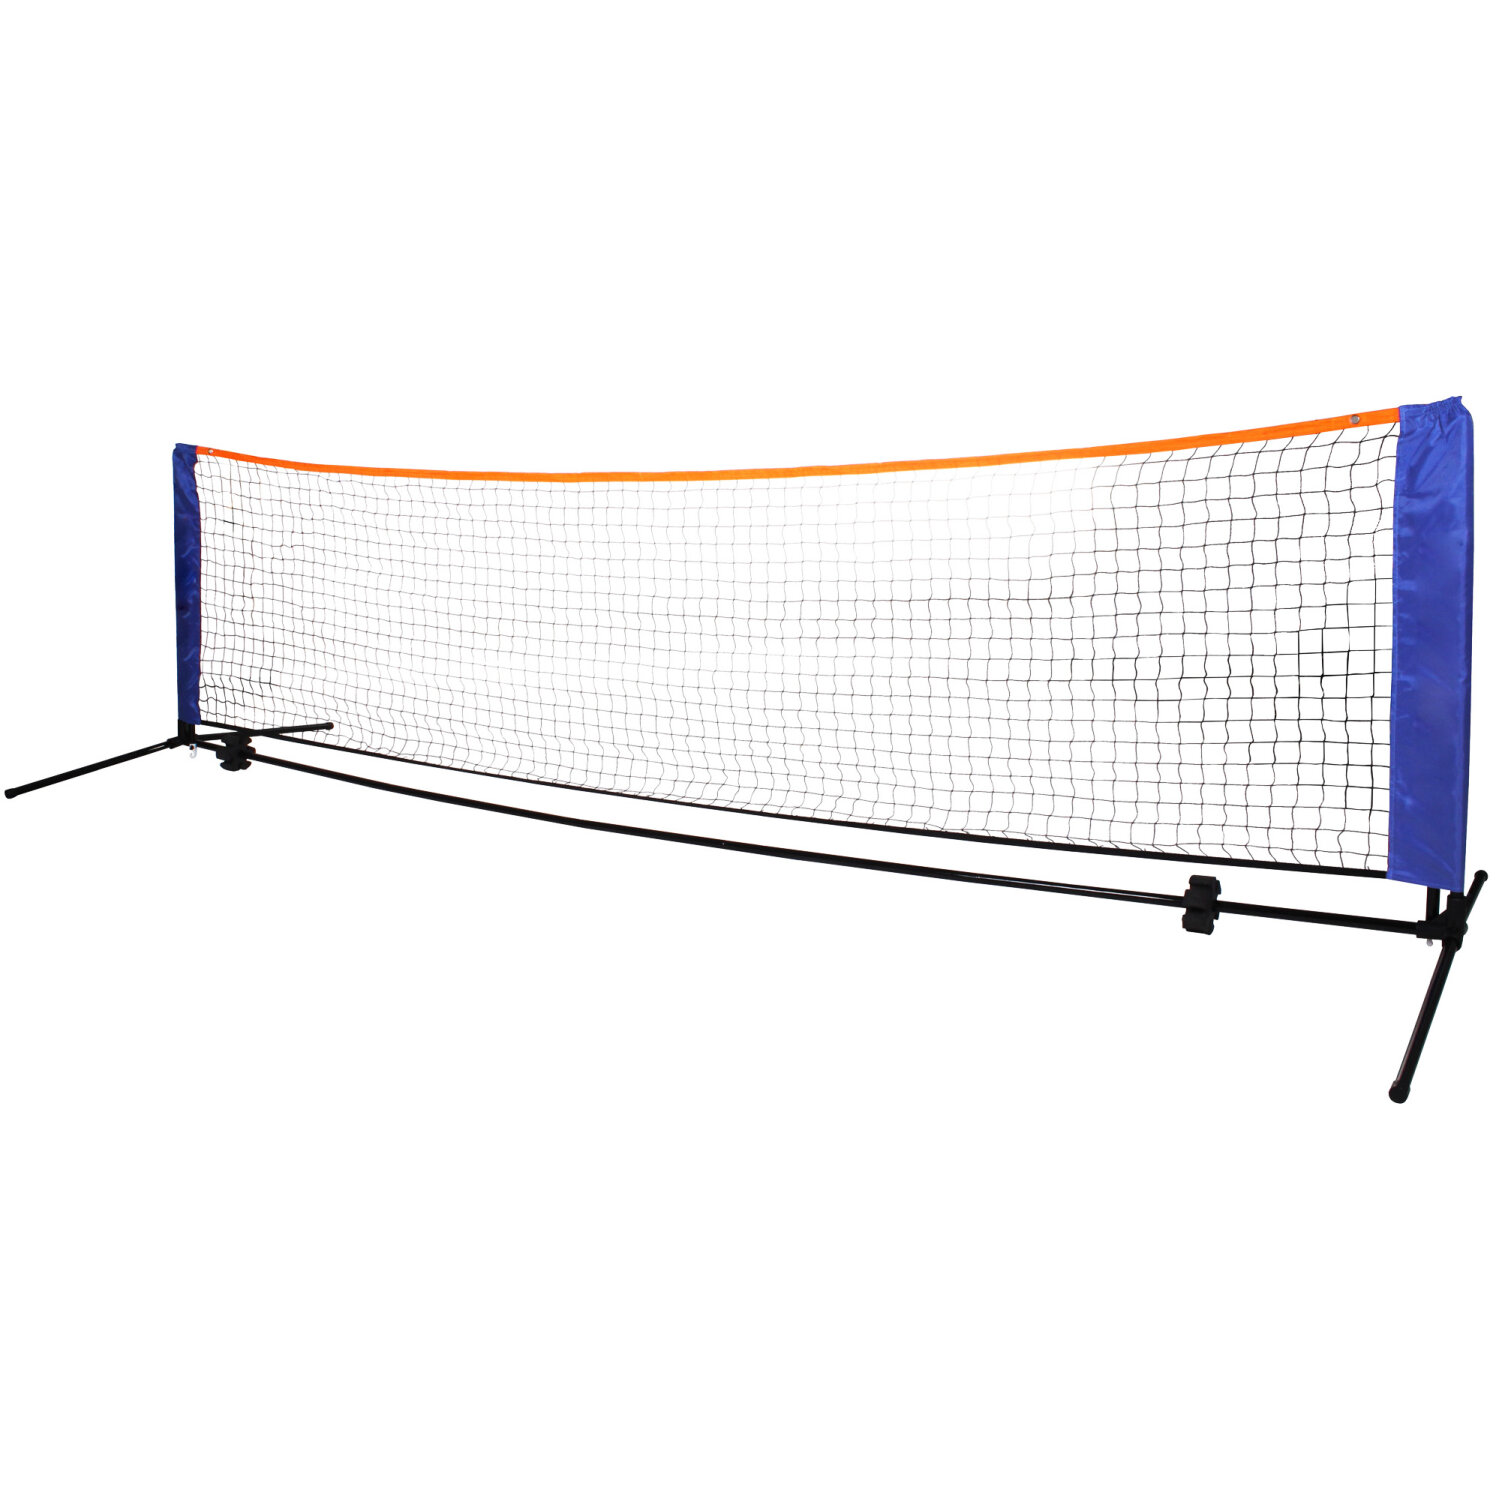 3M Adjustable Foldable Badminton Tennis Volleyball Net Garden Sports Training UK 